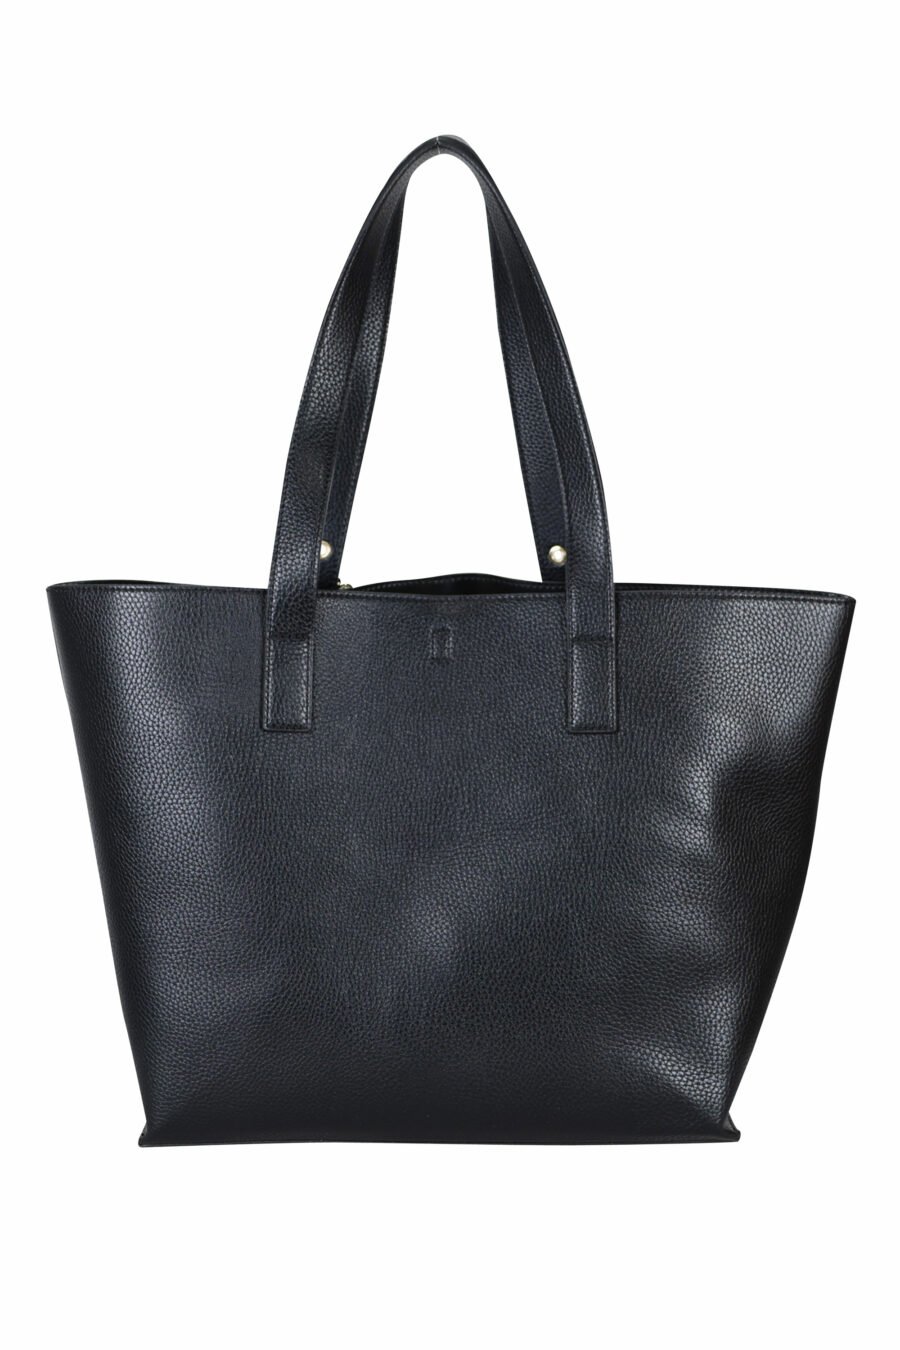 Black shopper bag with baroque buckles - 8052019407709 2